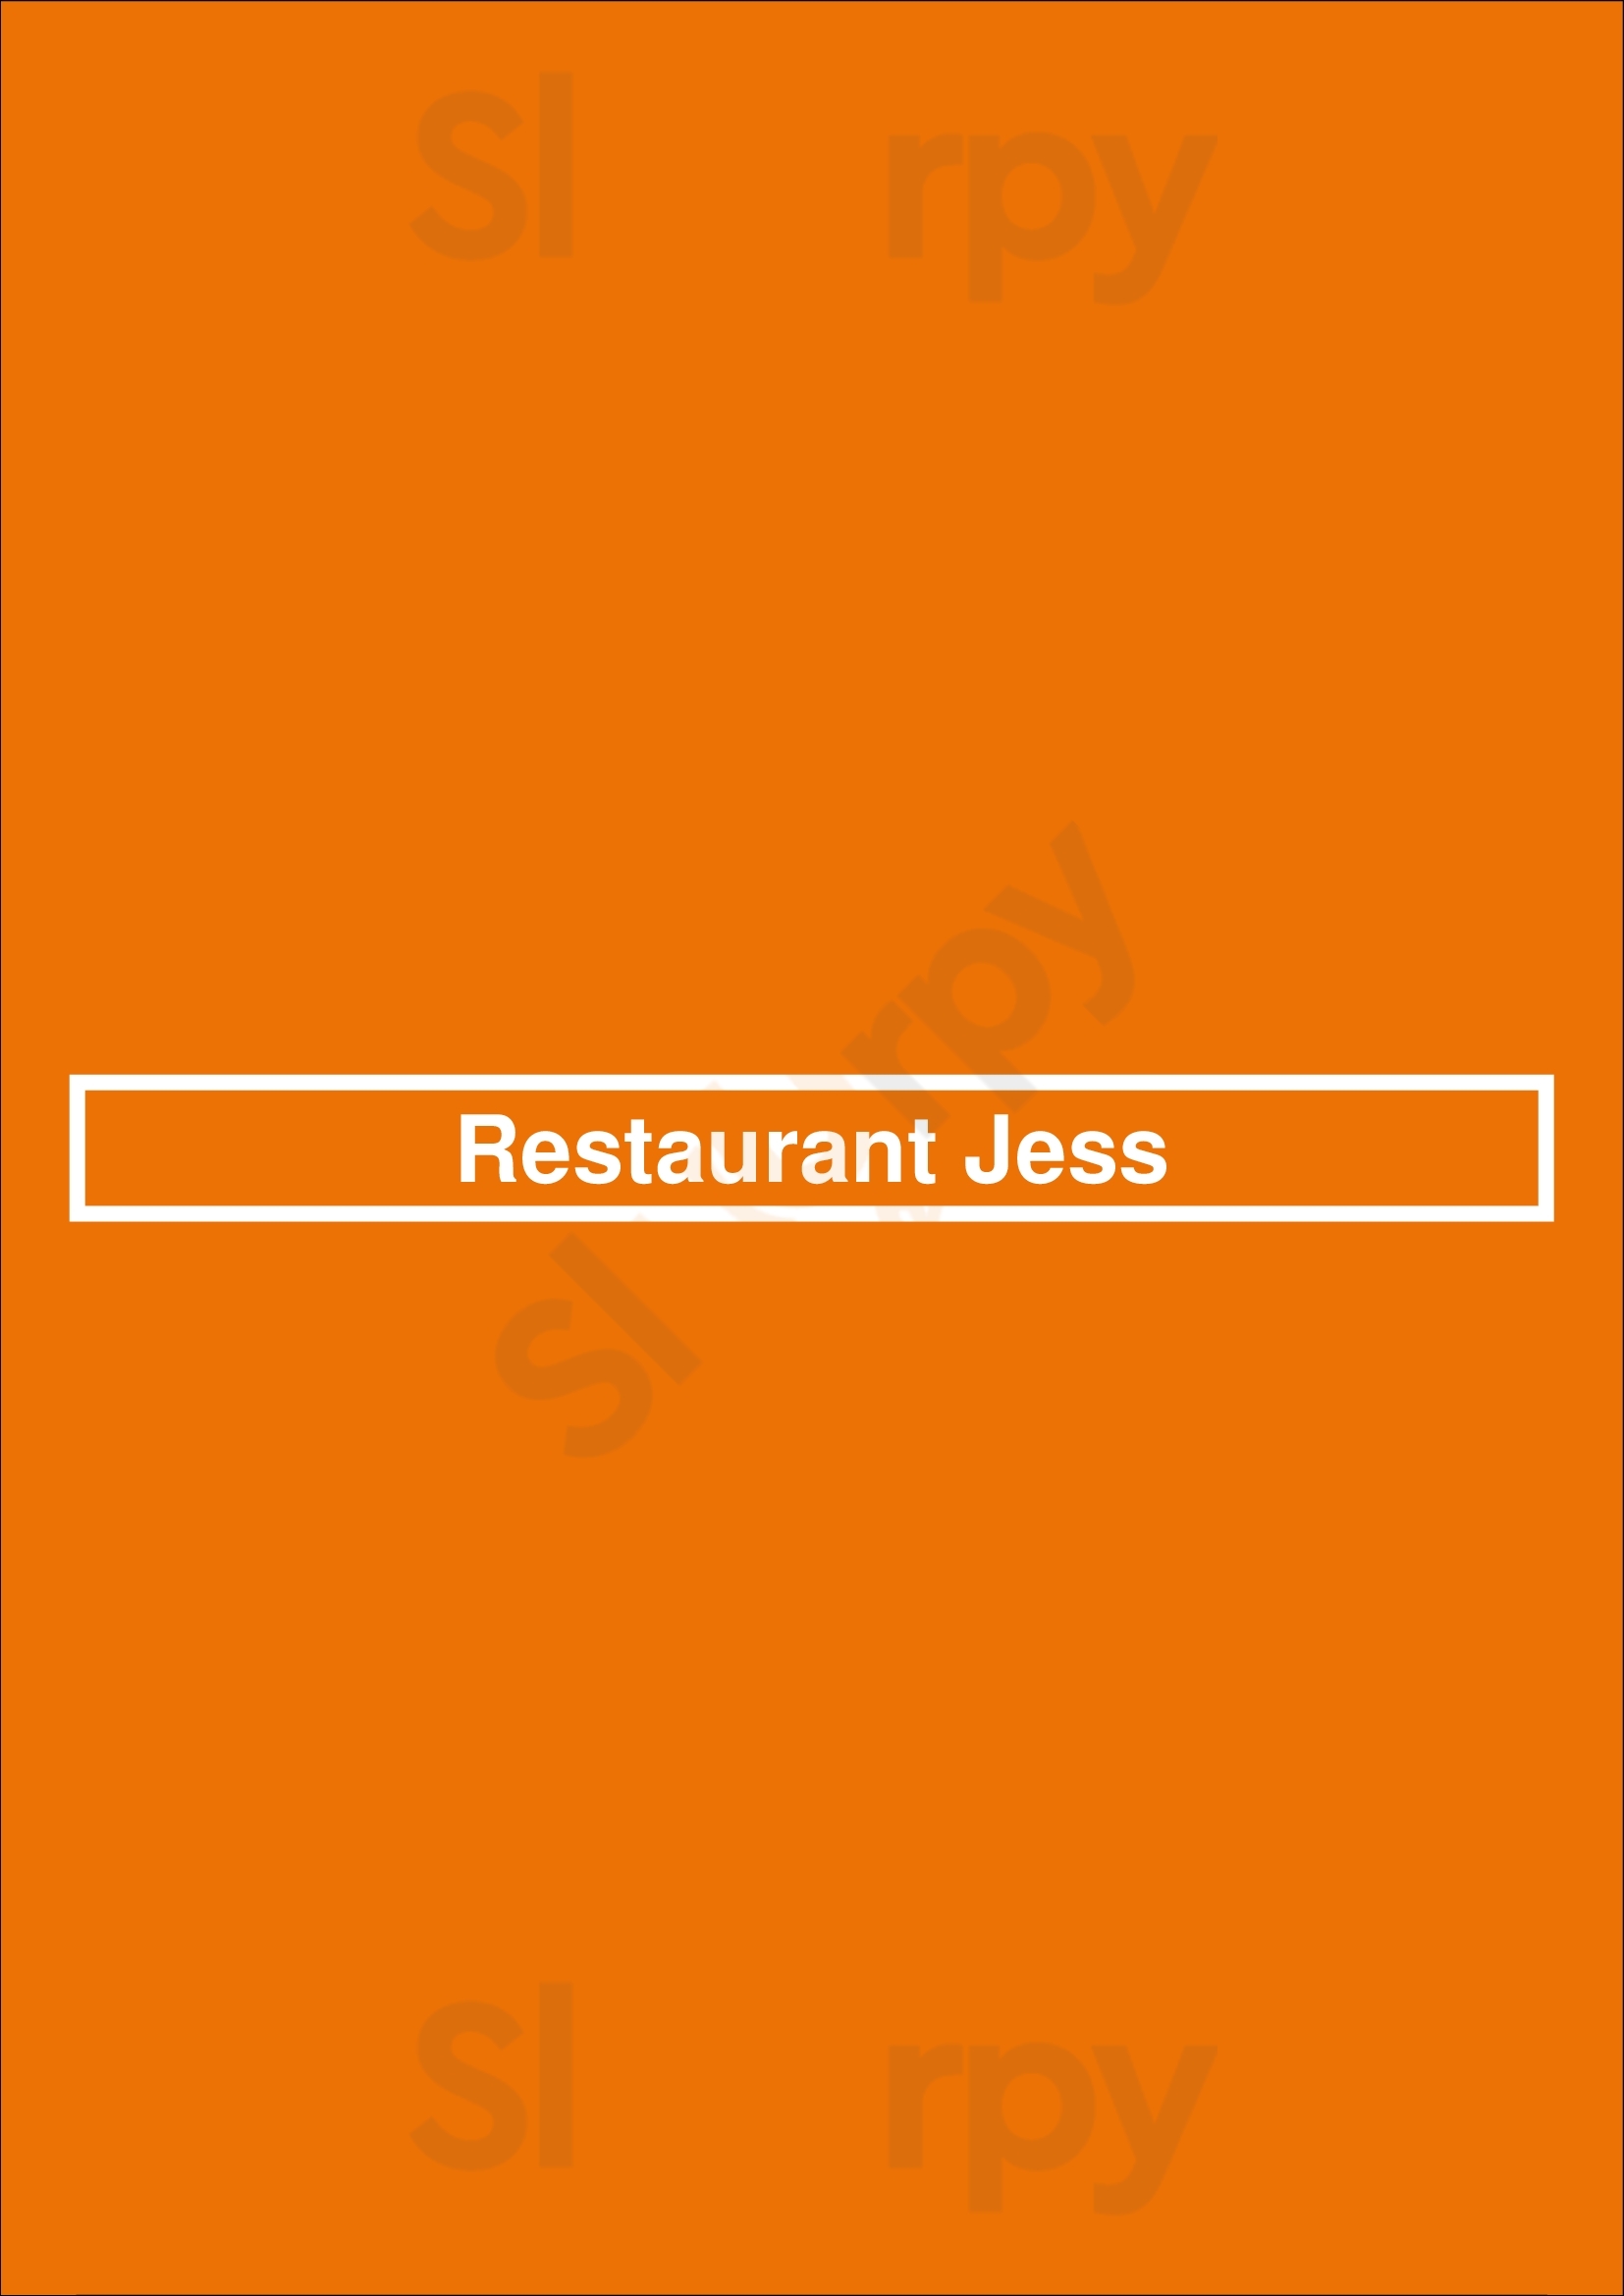 Restaurant Jess Abcoude Menu - 1